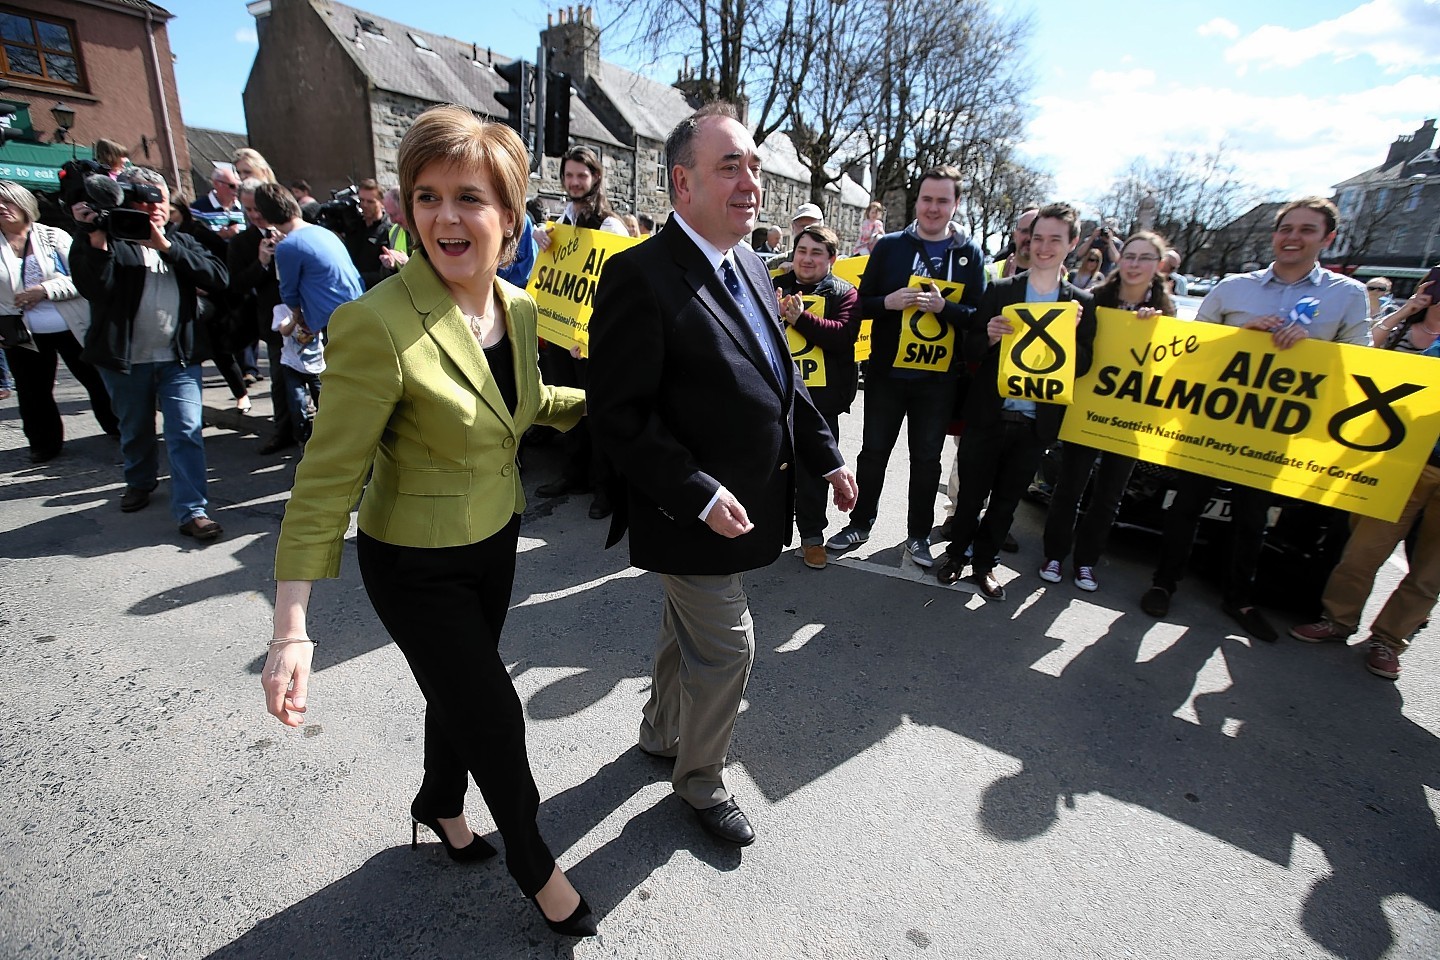 Nicola Sturgeon joins Alex Salmond on campaign trail